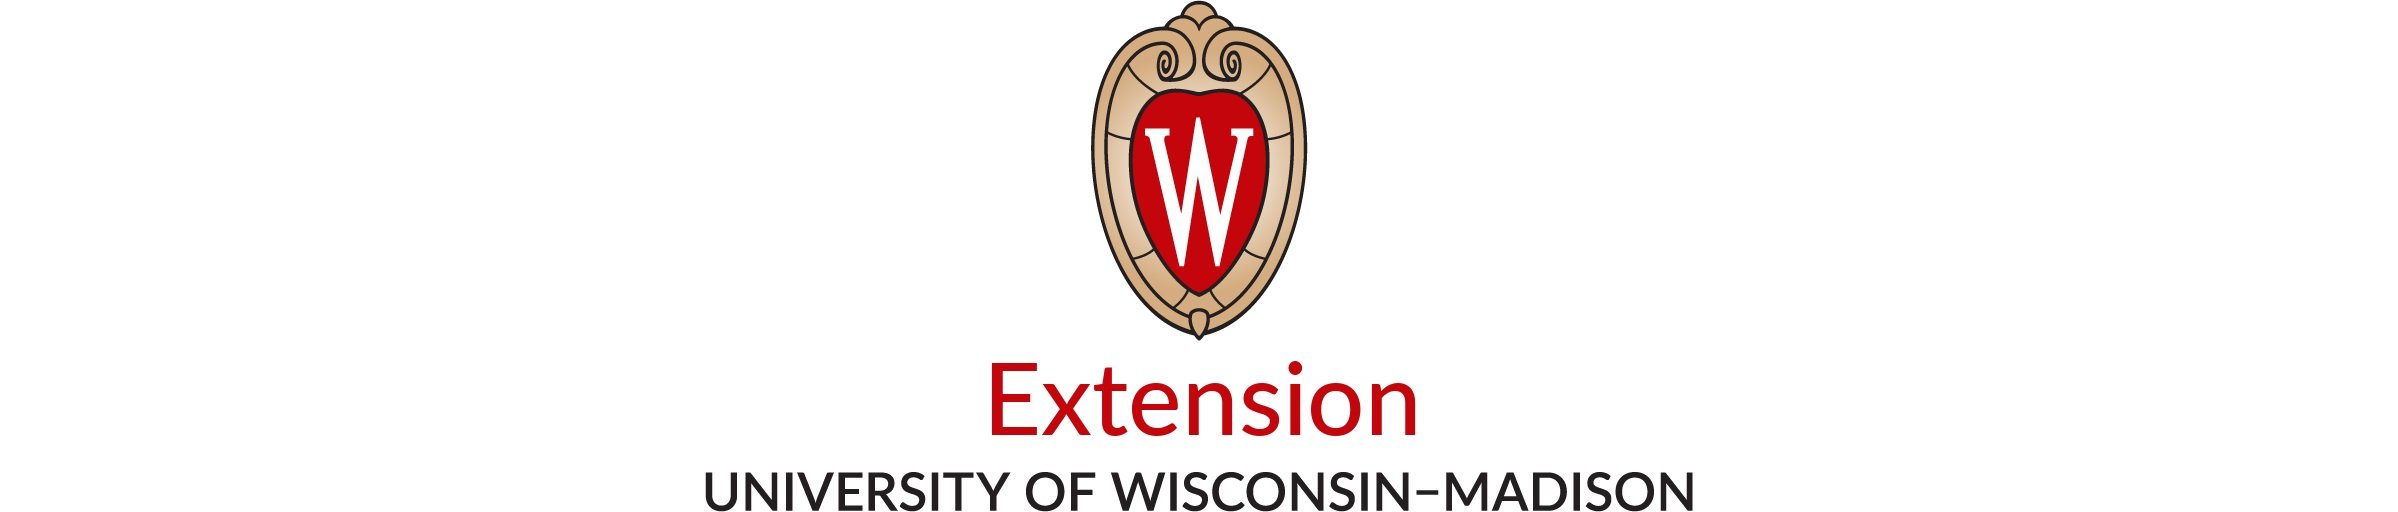 University of Wisconsin-Madison seeks Director